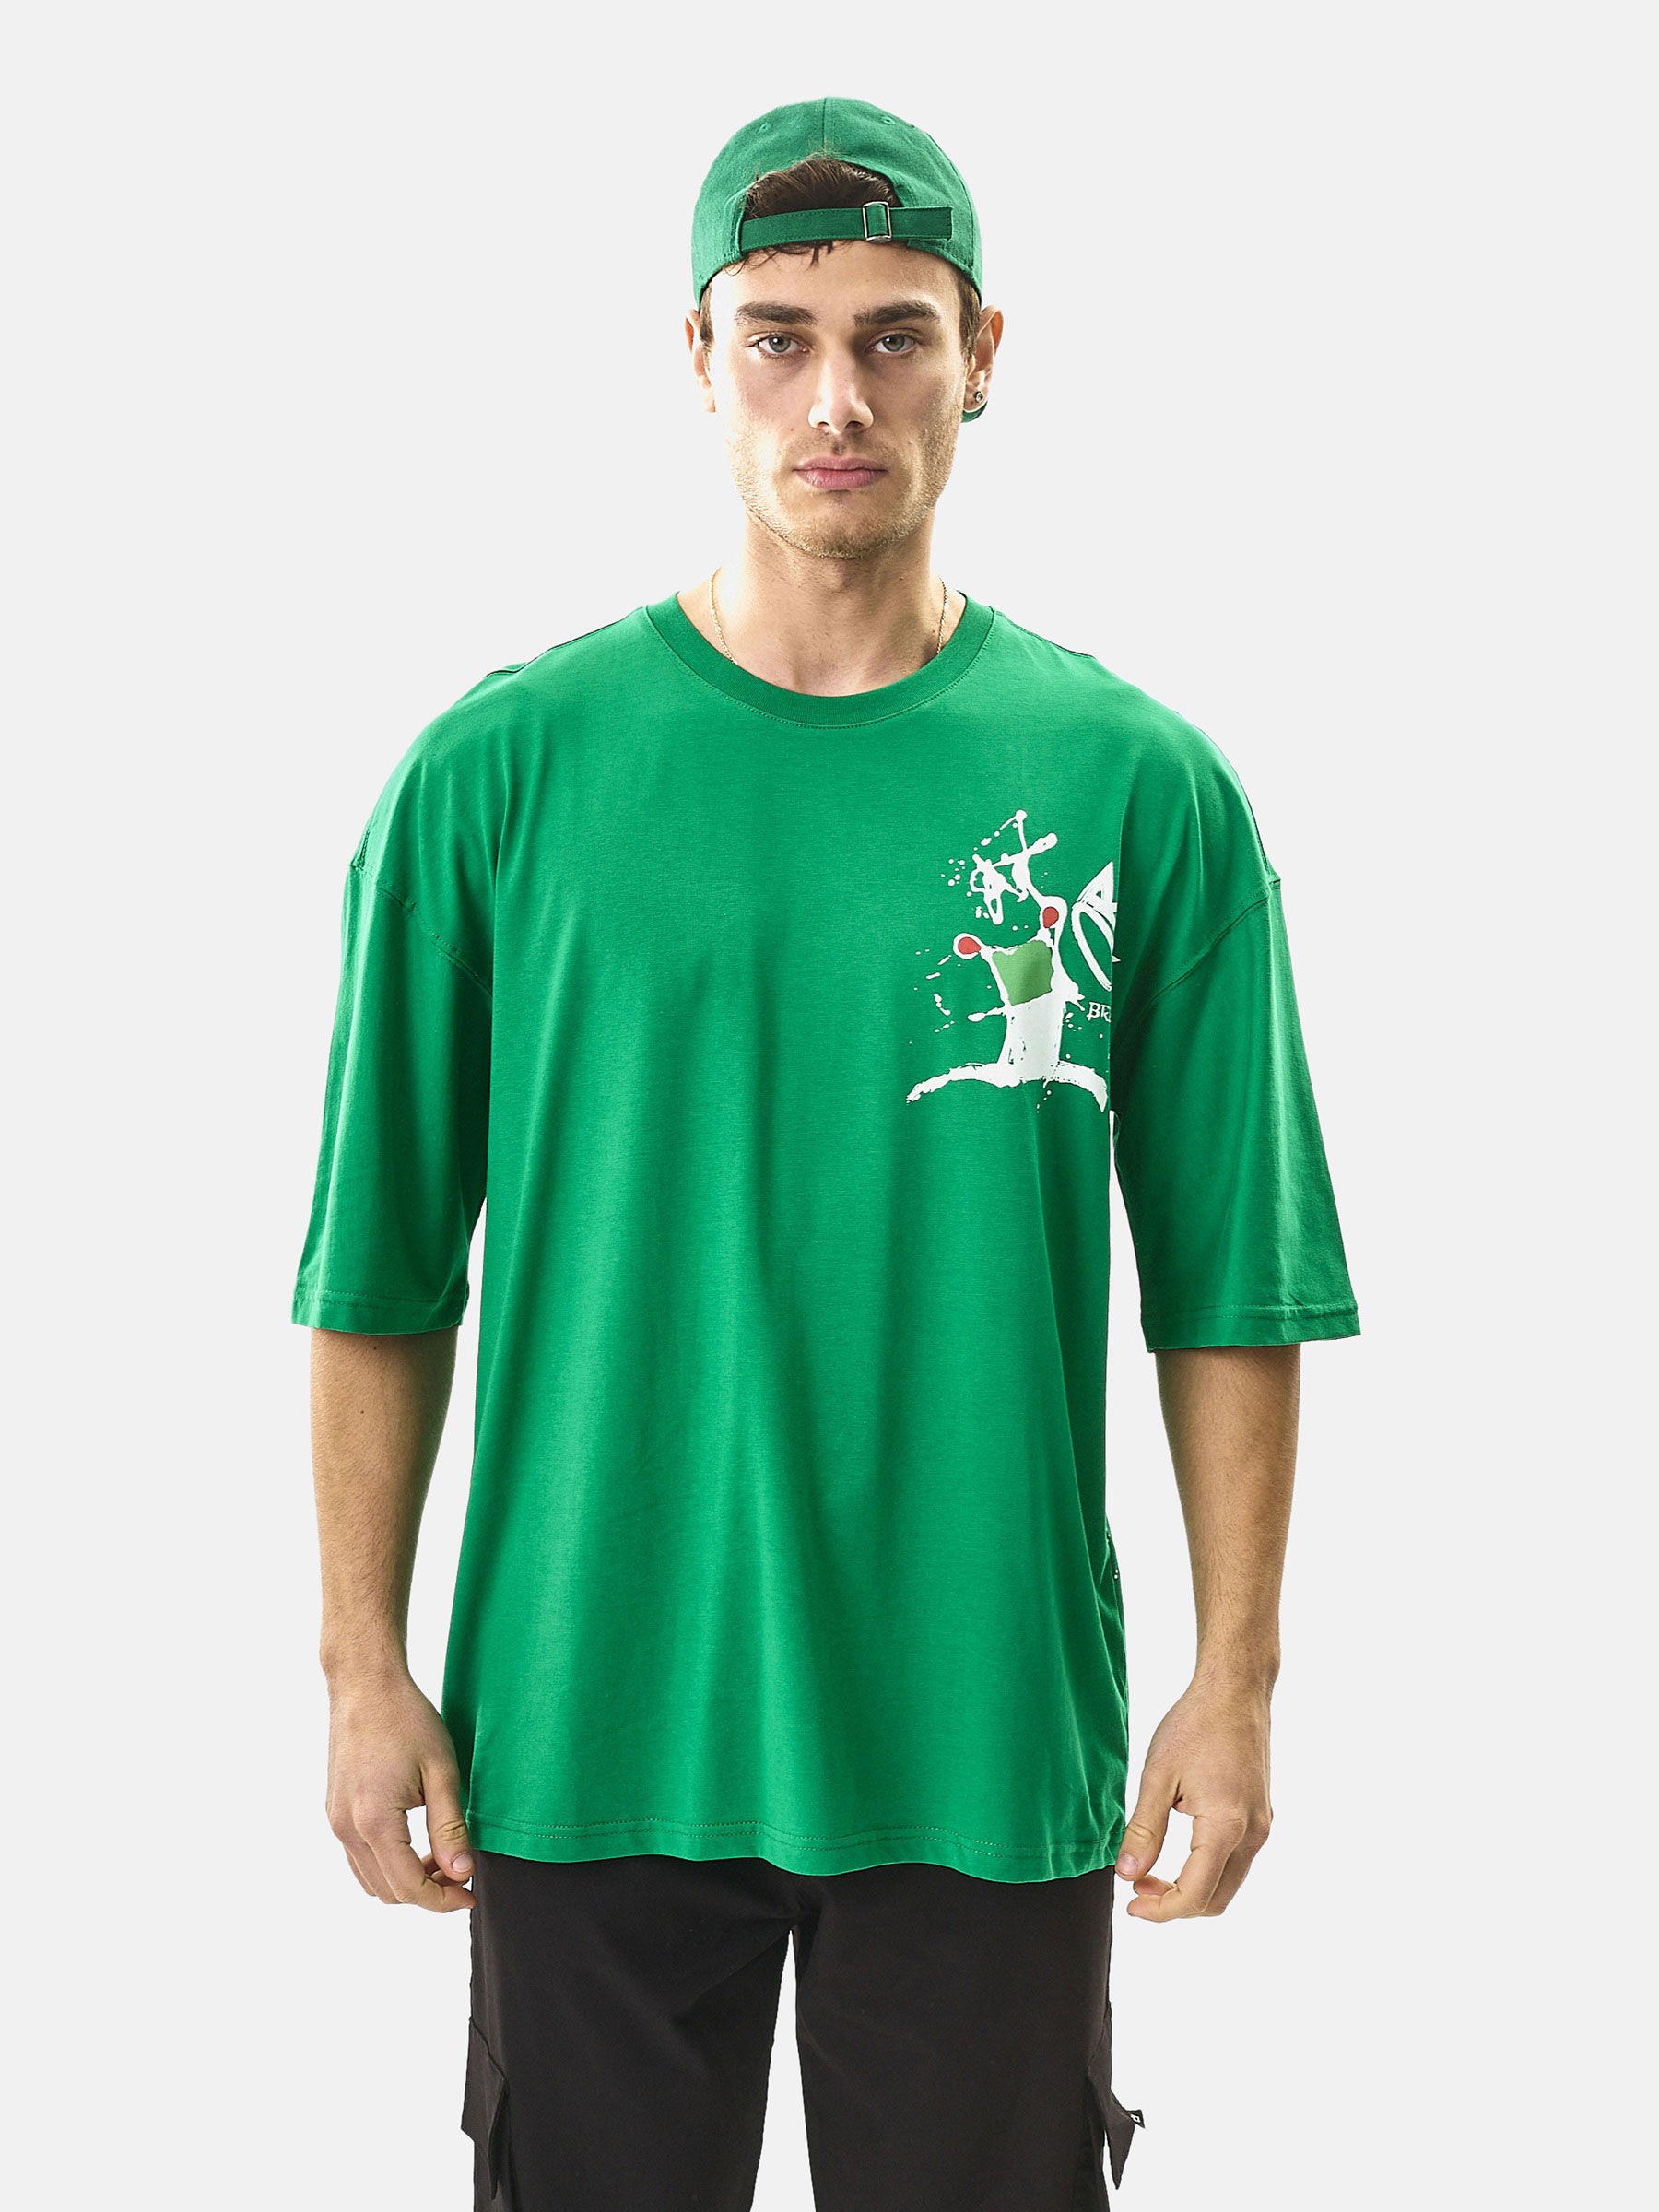 WAM Denim Brodie Green T-Shirt -